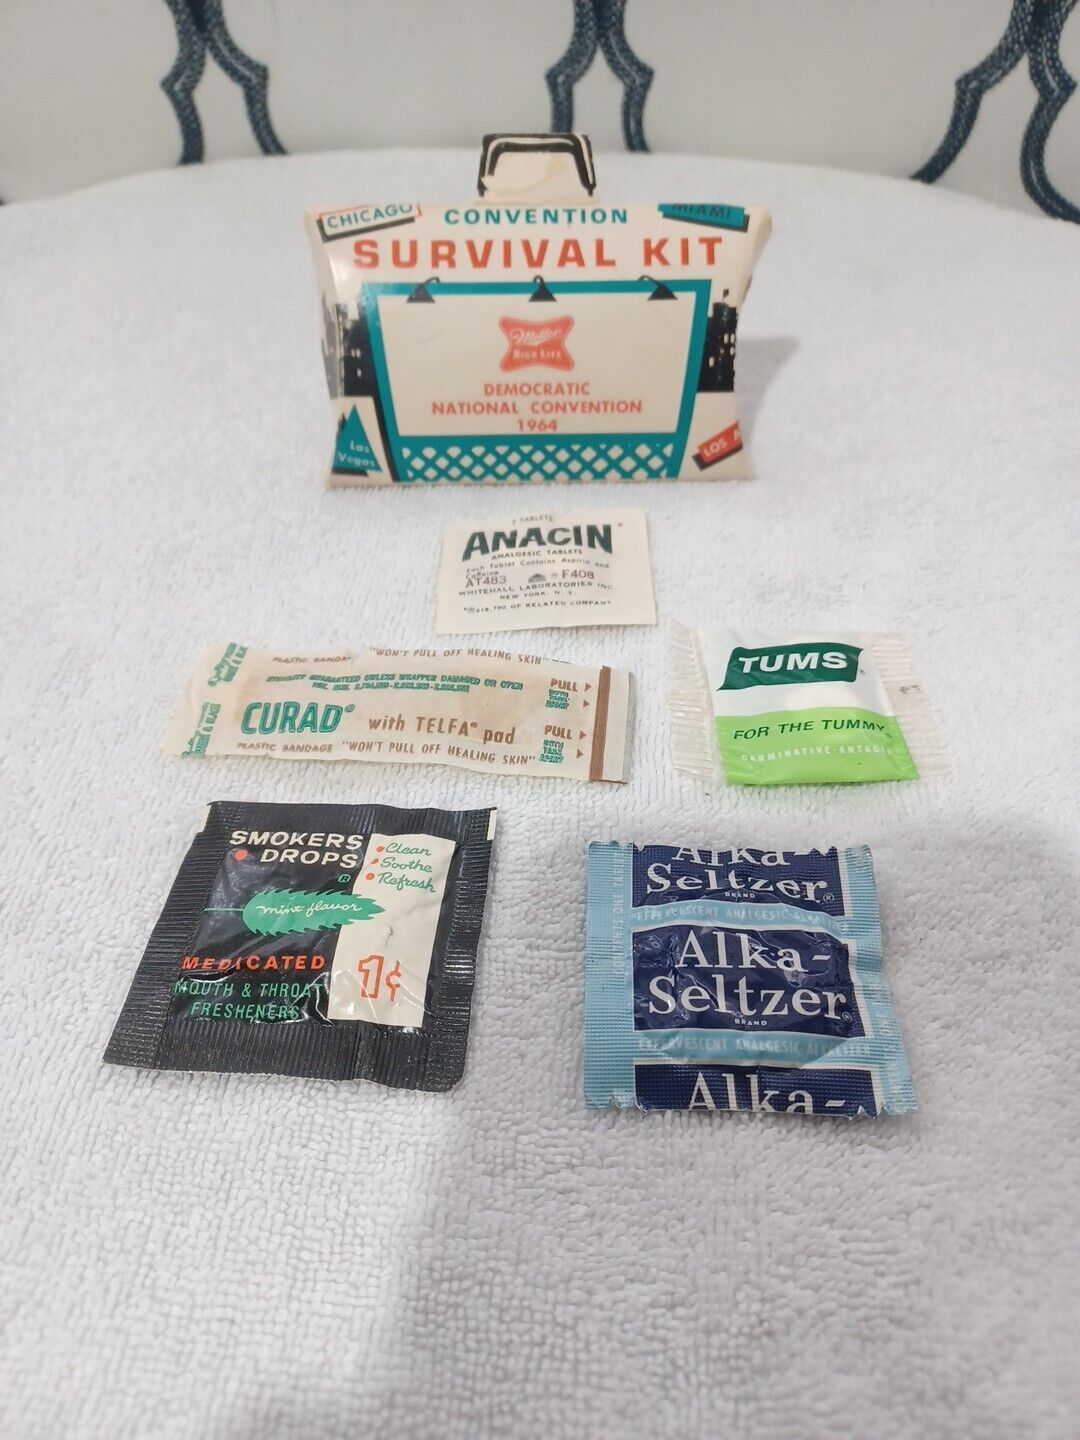 Vintage 1964 Democratic National Convention Survival Kit Souvenir Very nice